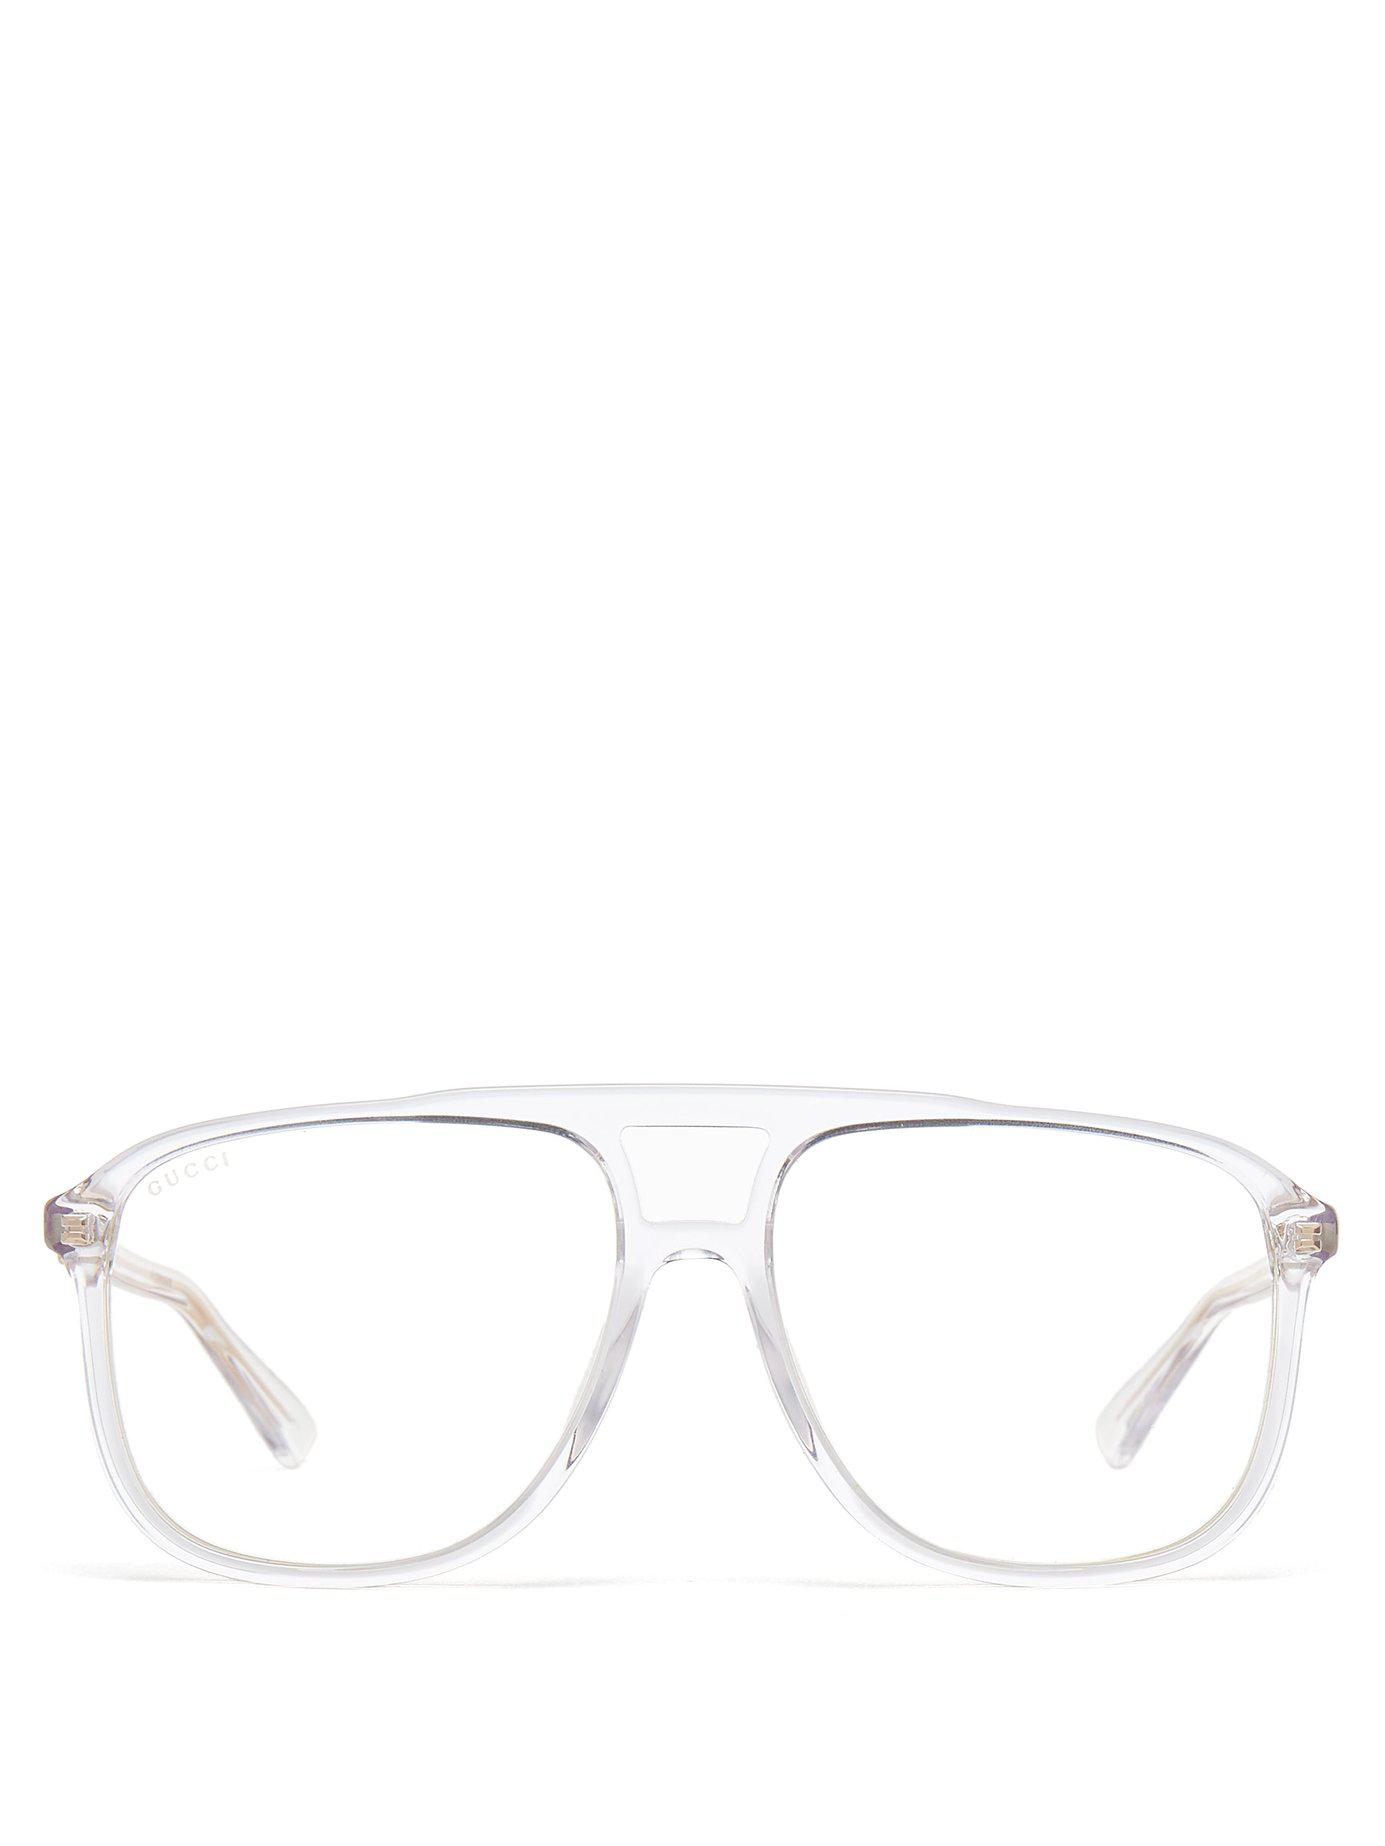 Gucci Squared-aviator Acetate Optical Glasses for Men | Lyst